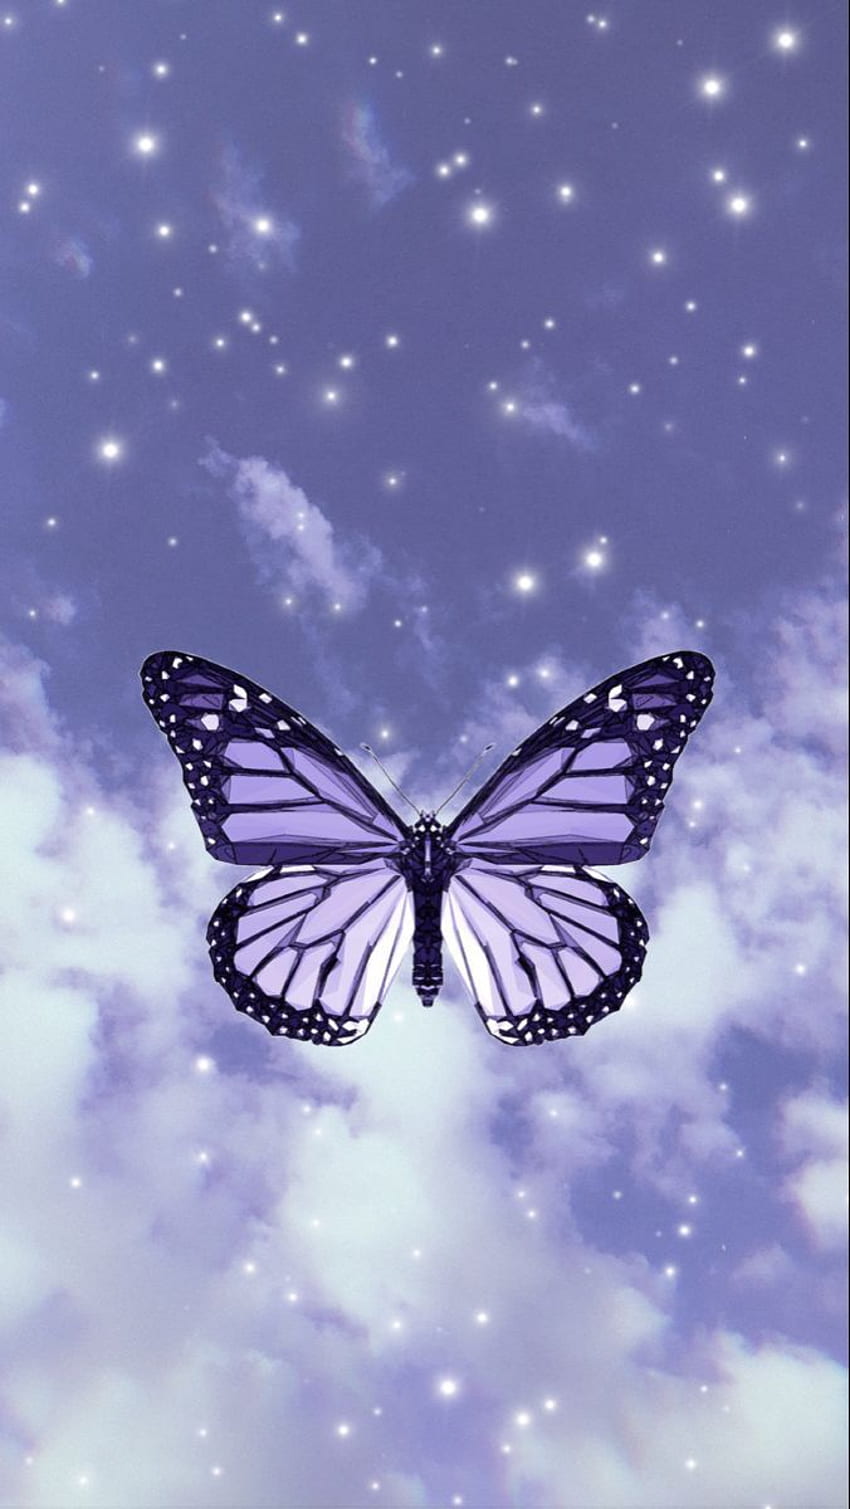 Mariposa morada en 2020. Mariposa morada, Mariposa iphone, Mariposa, Mariposa morada oscura fondo de pantalla del teléfono